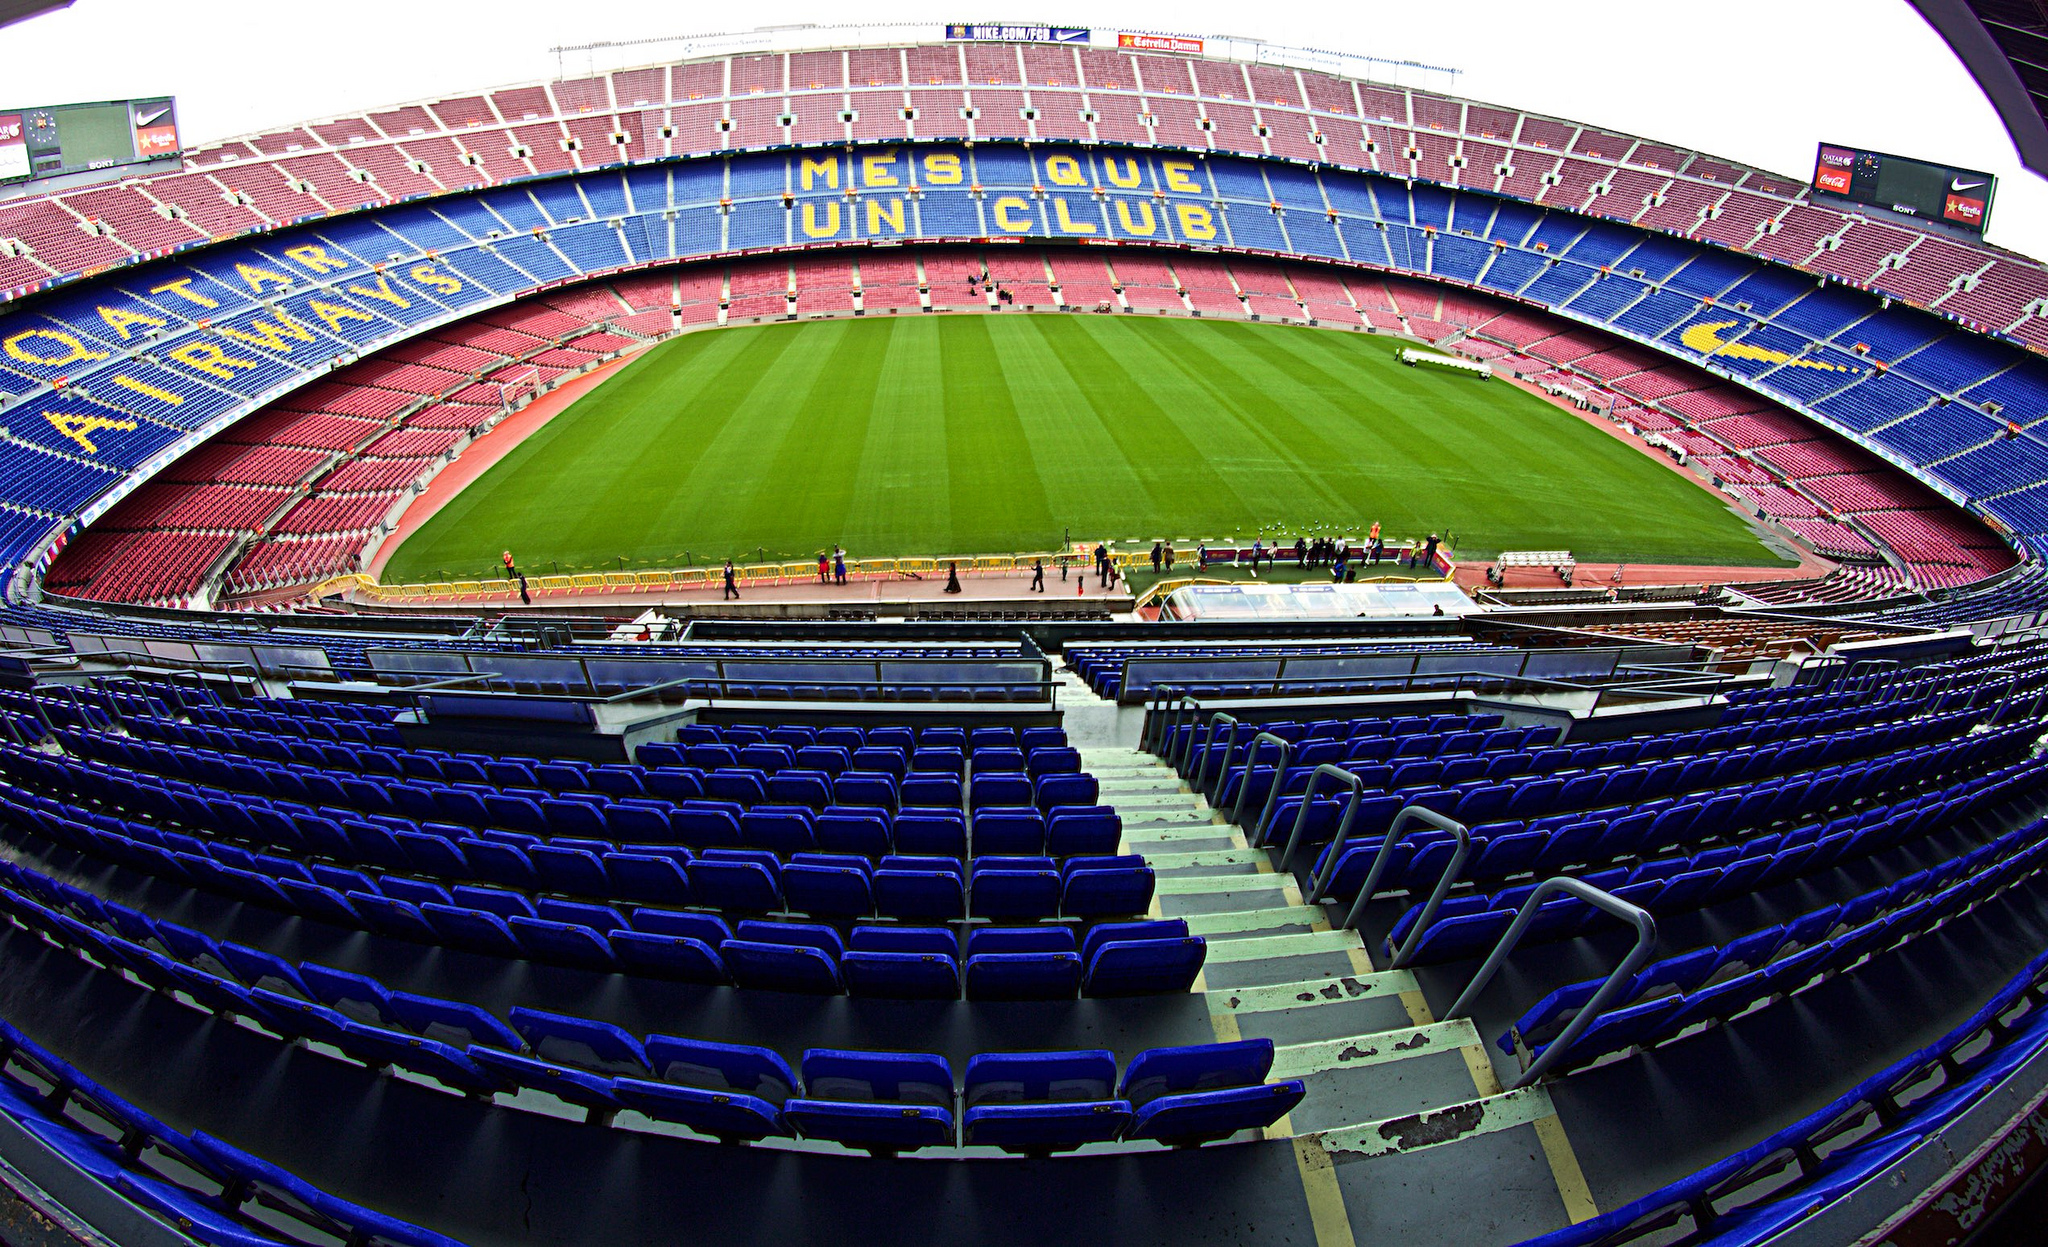 Вместимость камп. Камп ноу стадион. Барселона Камп ноу. Стадион Камп ноу Барселона Испания. Стадион Camp nou.